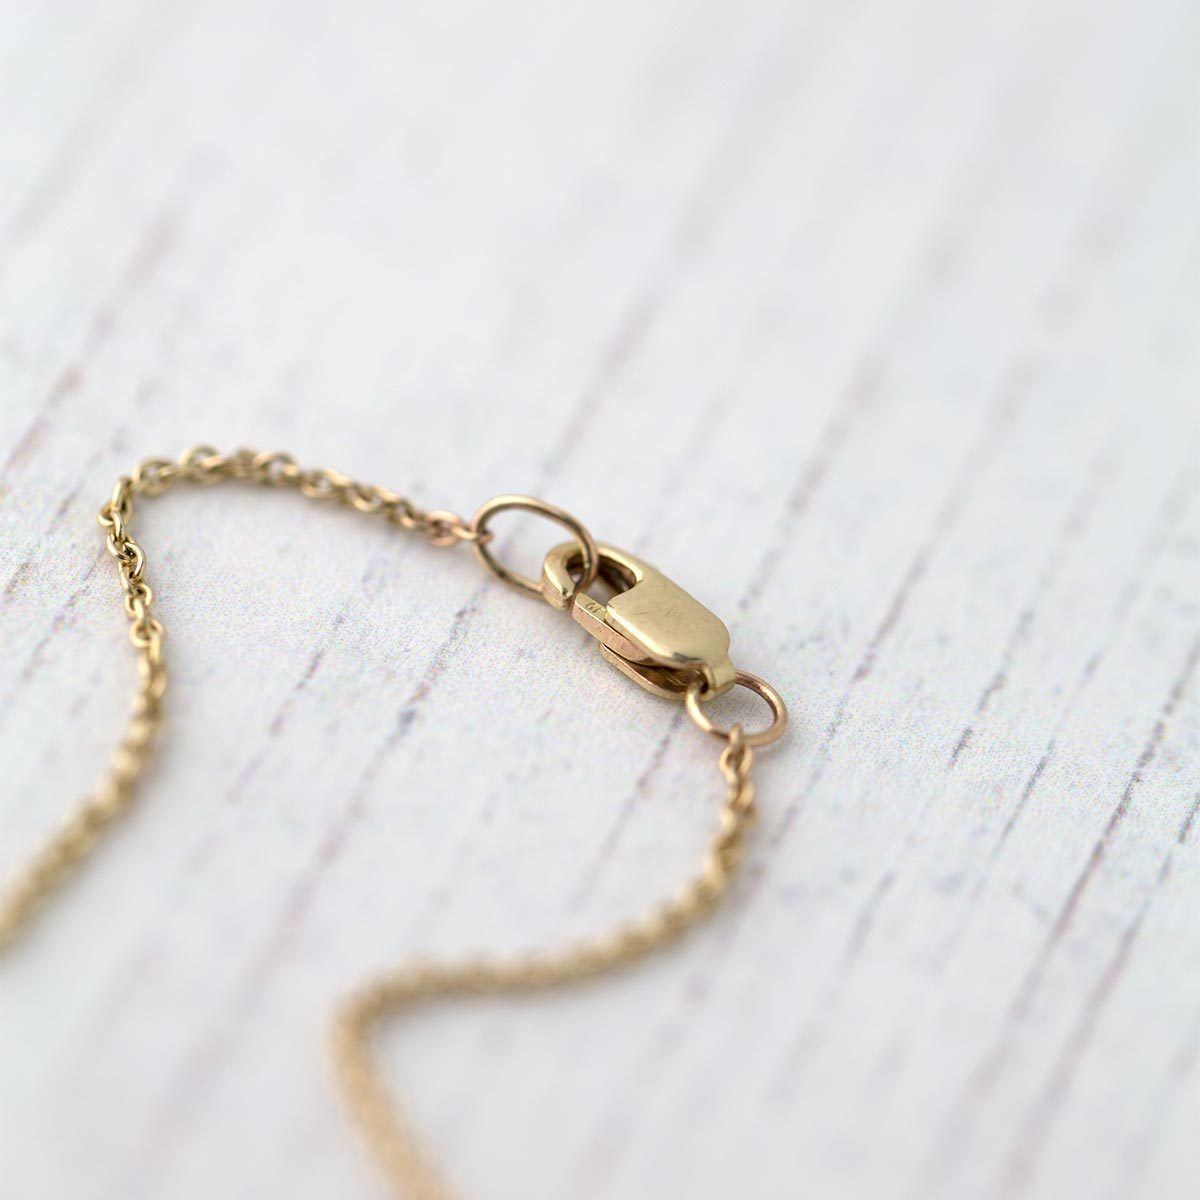 Whisper Bracelet - Silver, Gold, Rose Gold - Handmade Jewelry by Burnish